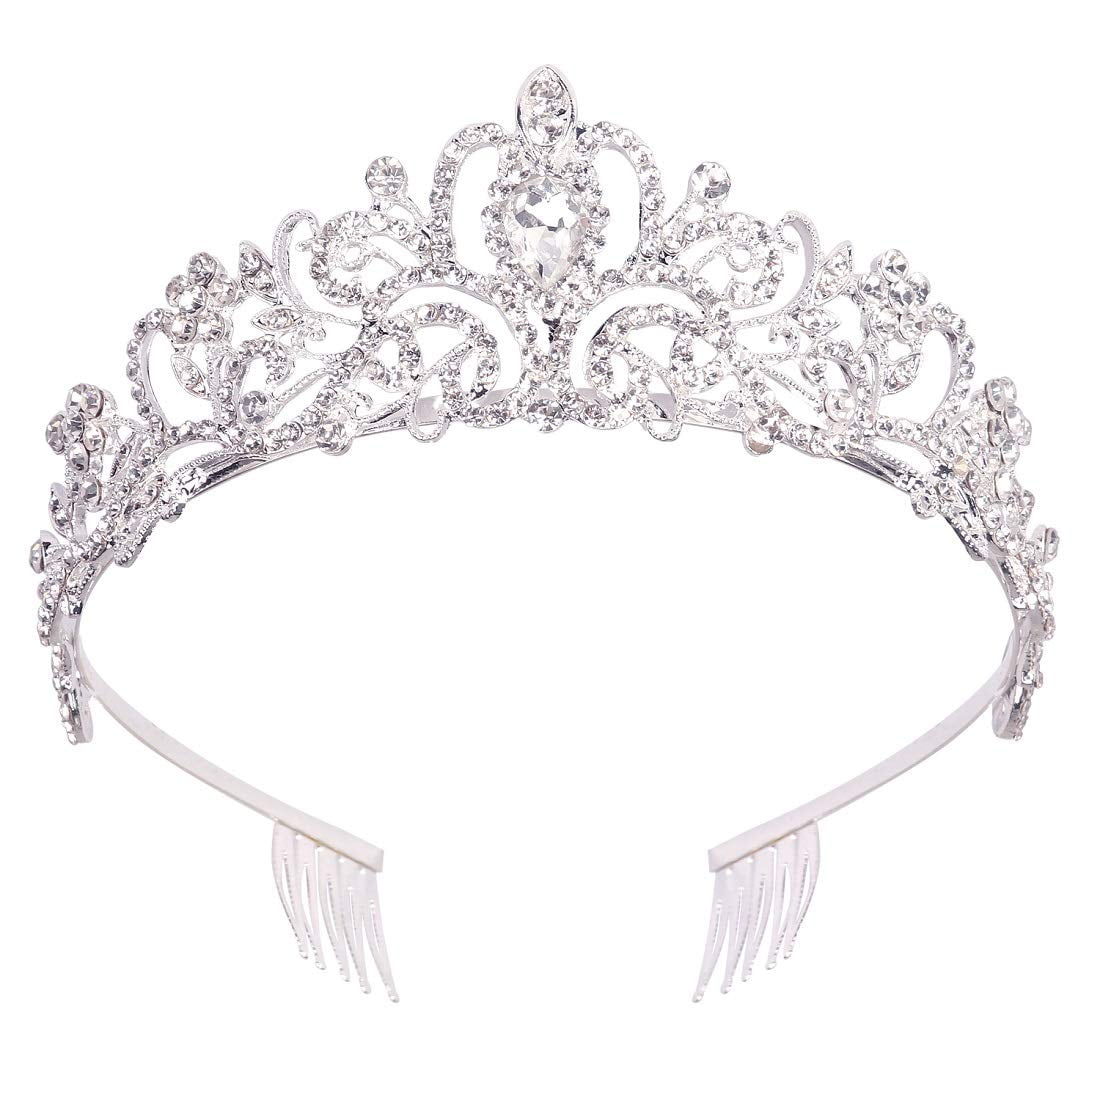 Crown Headband Bridal Wedding Jewelry Stunning Tiaras Crowns Headbands 